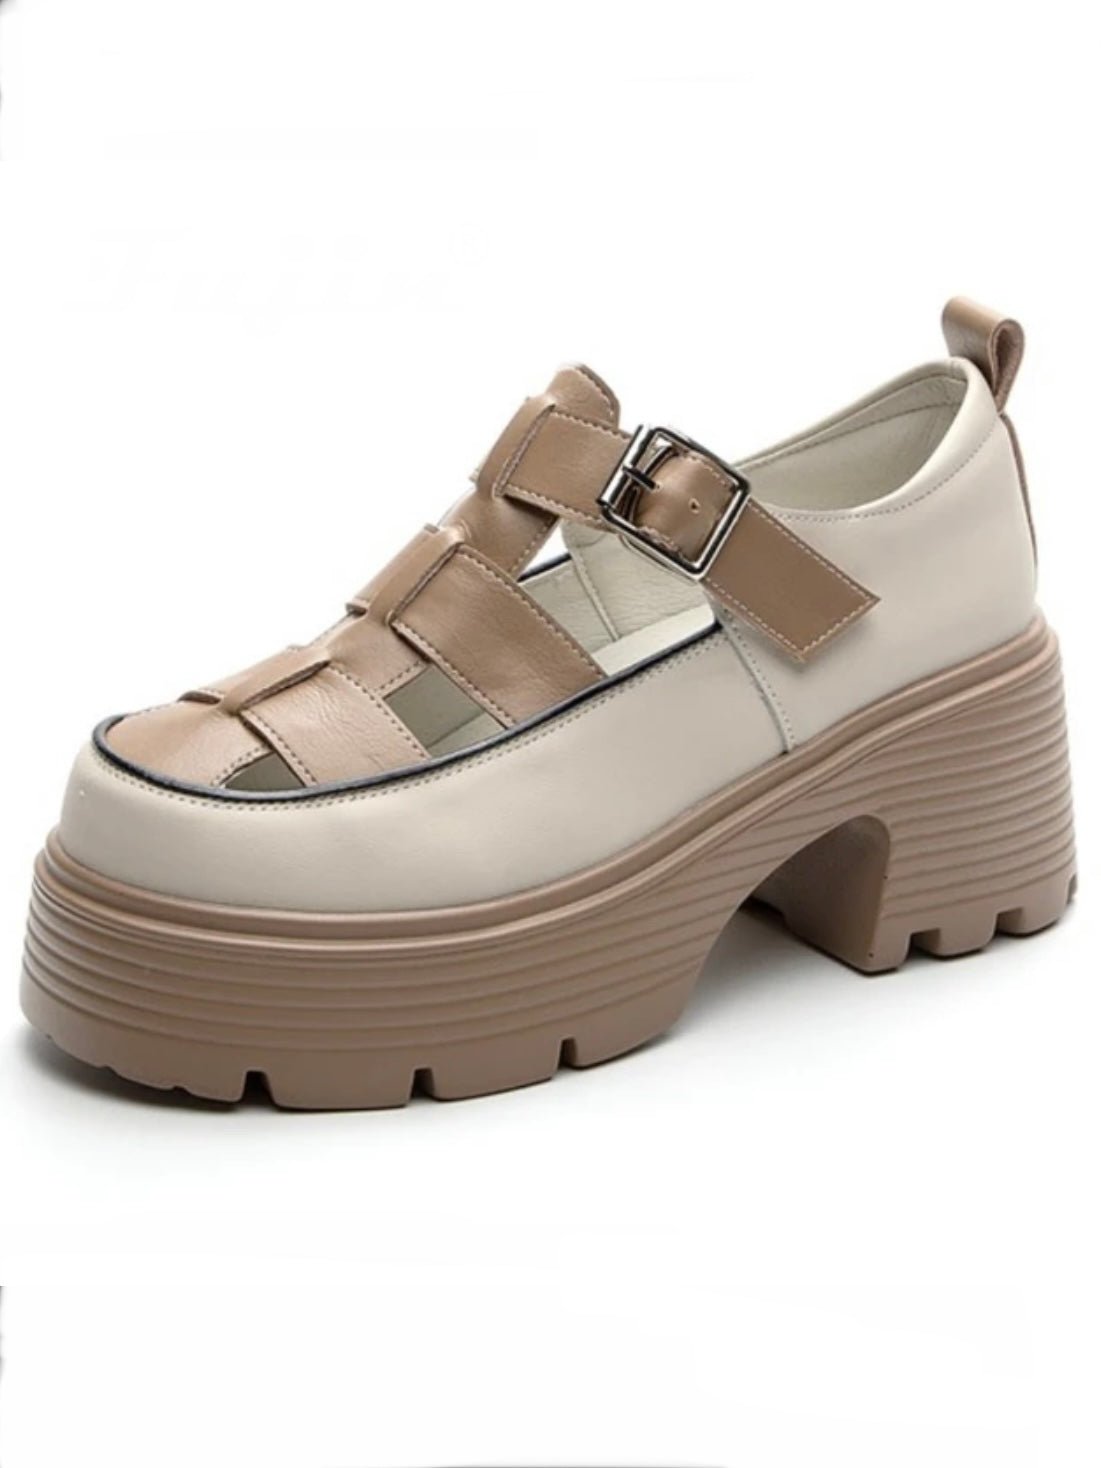 Beige two tones high heels platform shoes - Wapas